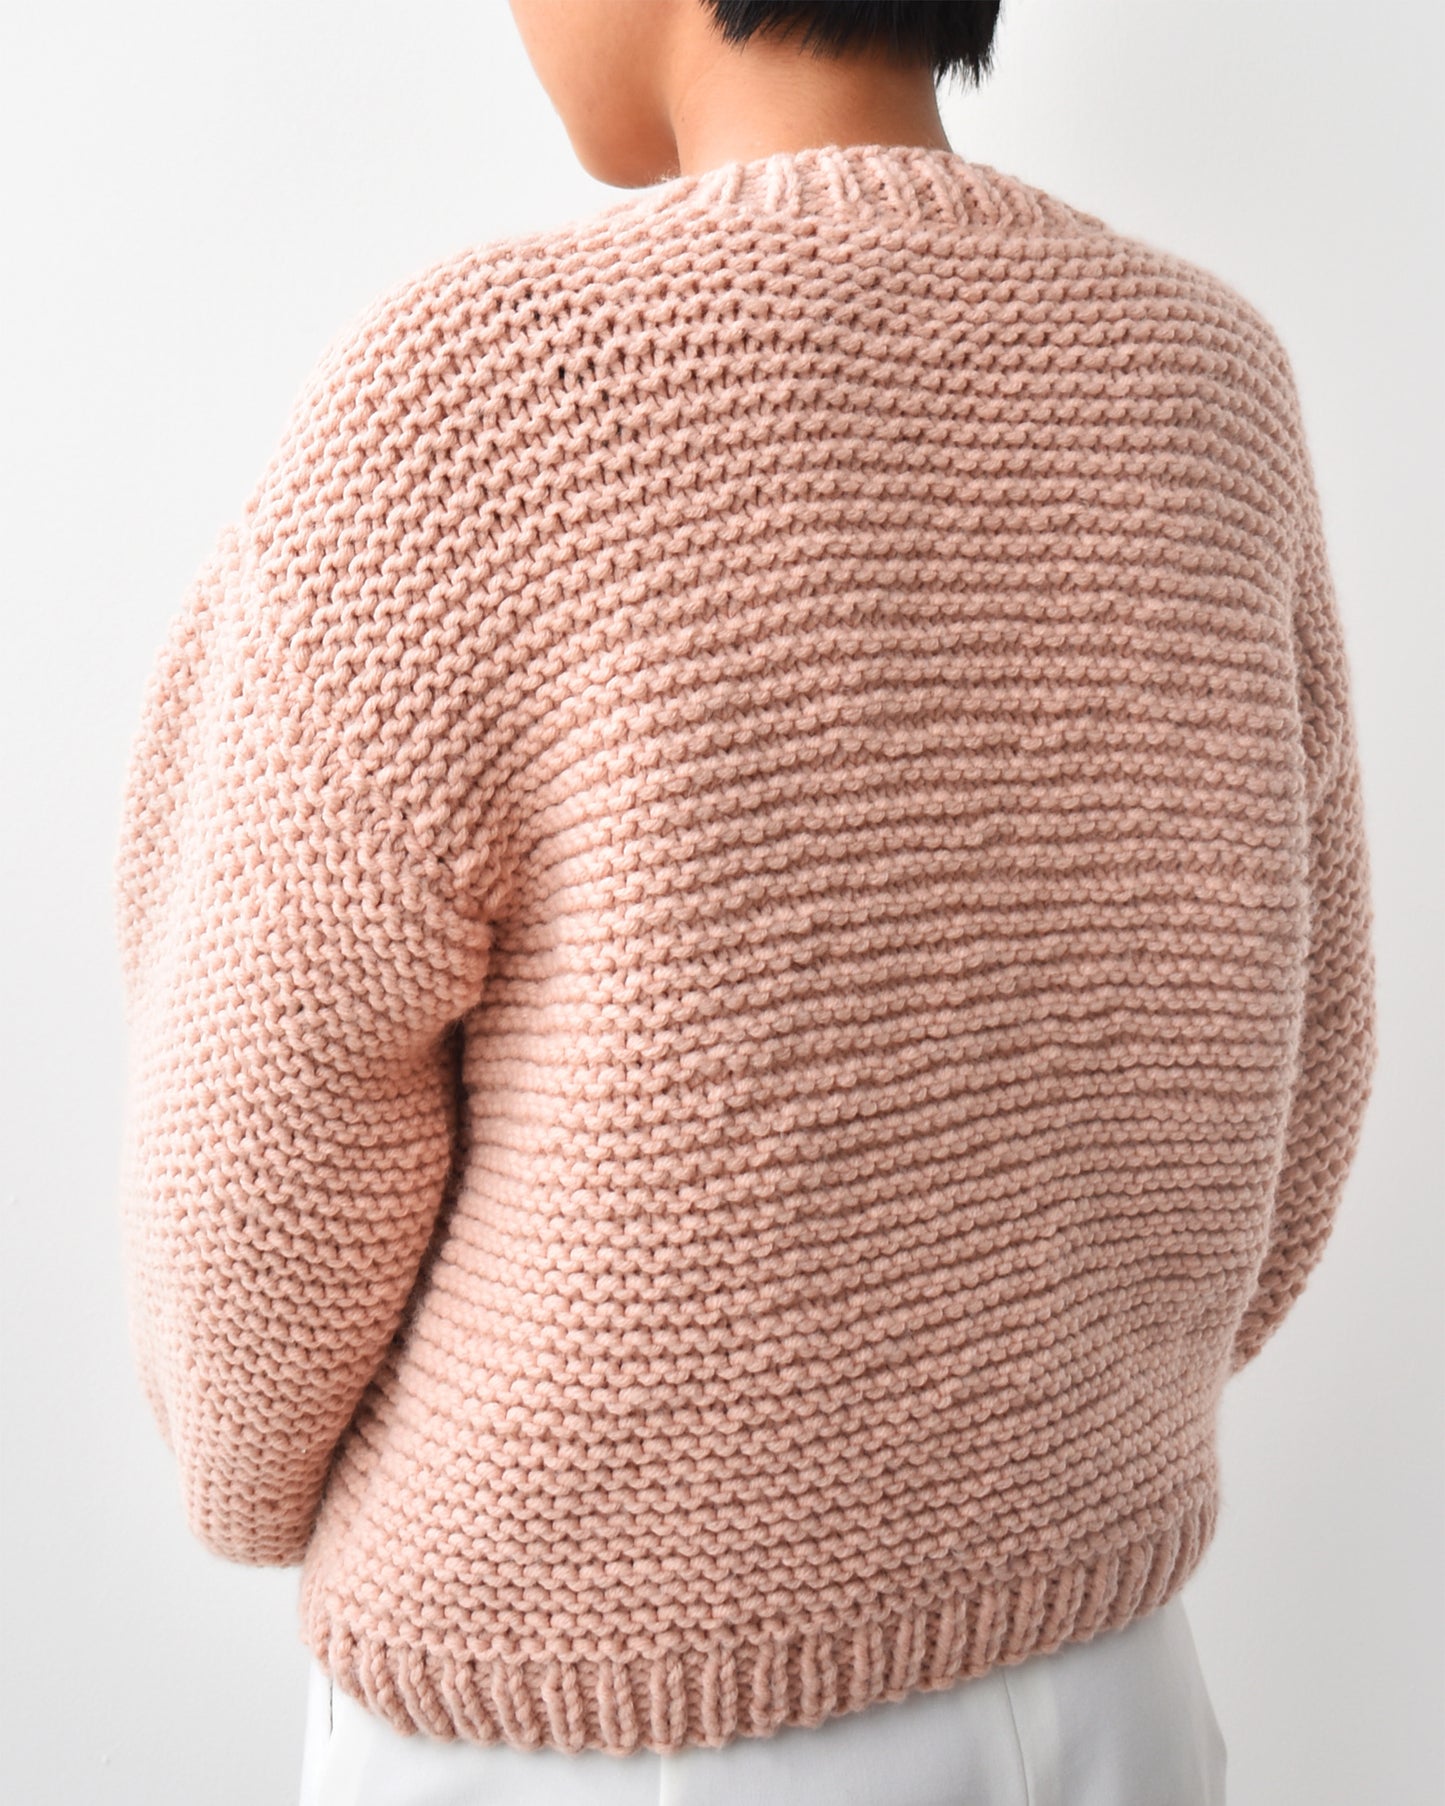 Sweater No.3 | Beginner knitting pattern